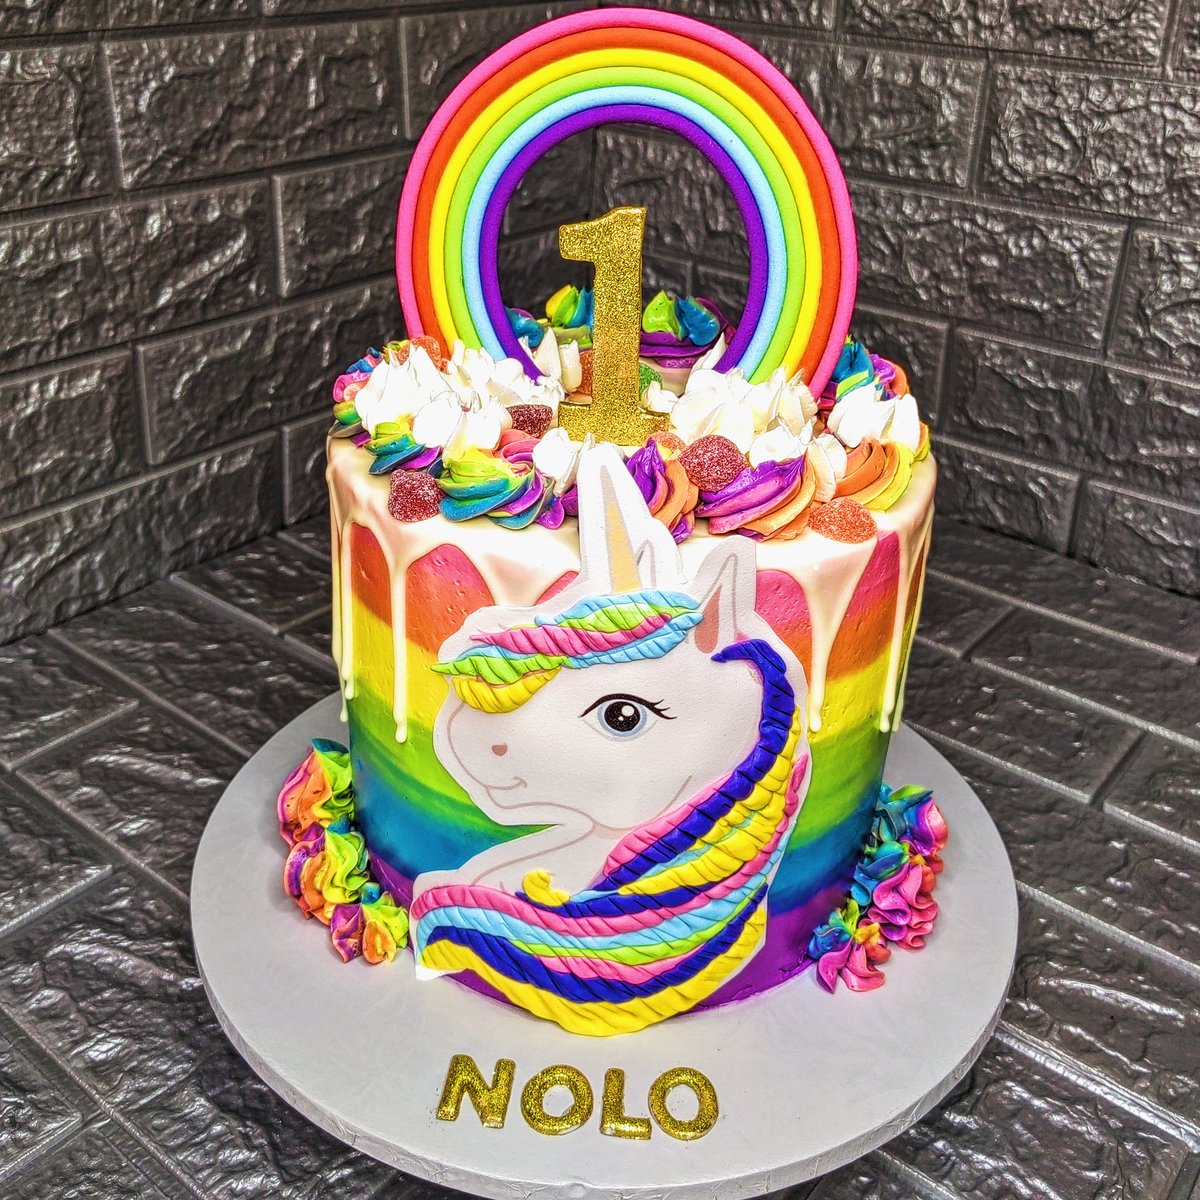 Unicorn x Rainbow Cake

Delivered @ Soshanguve PP3

 #unicorn #unicorncake #rainbow #rainbowcake #soshanguve #pretoria #lapearlsconfec stage 6